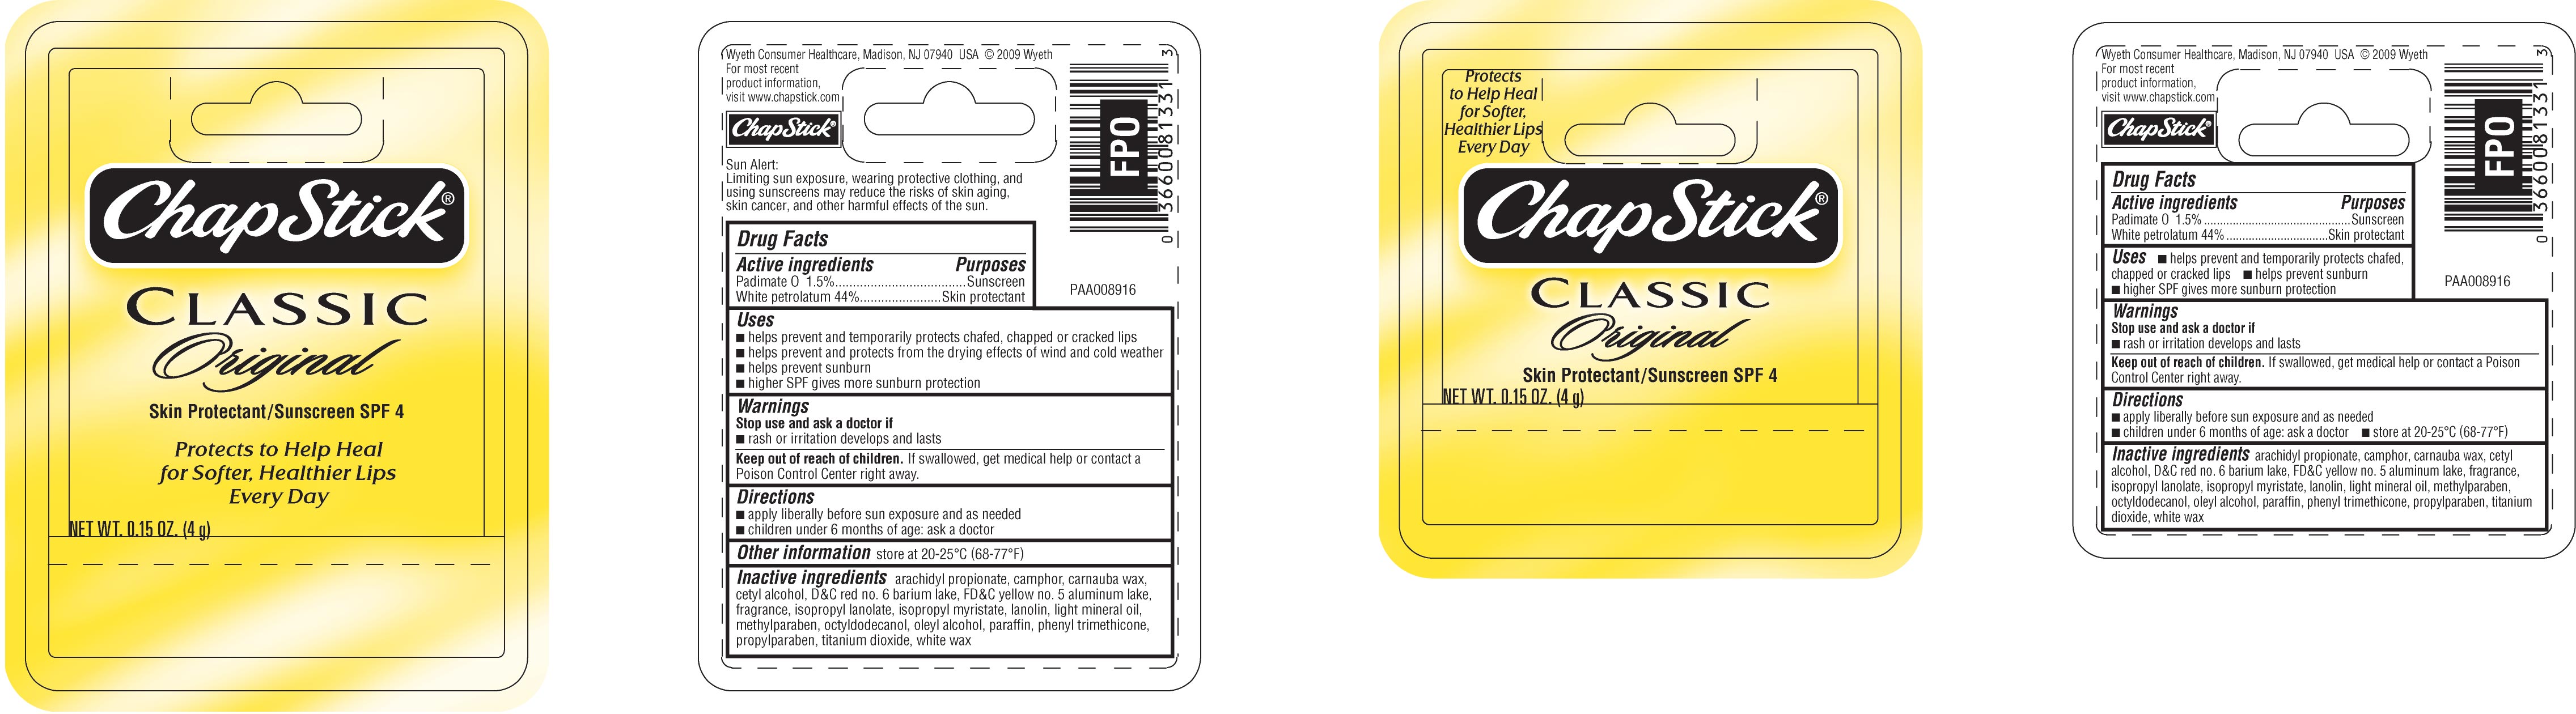 ChapStick Classic Original Packaging